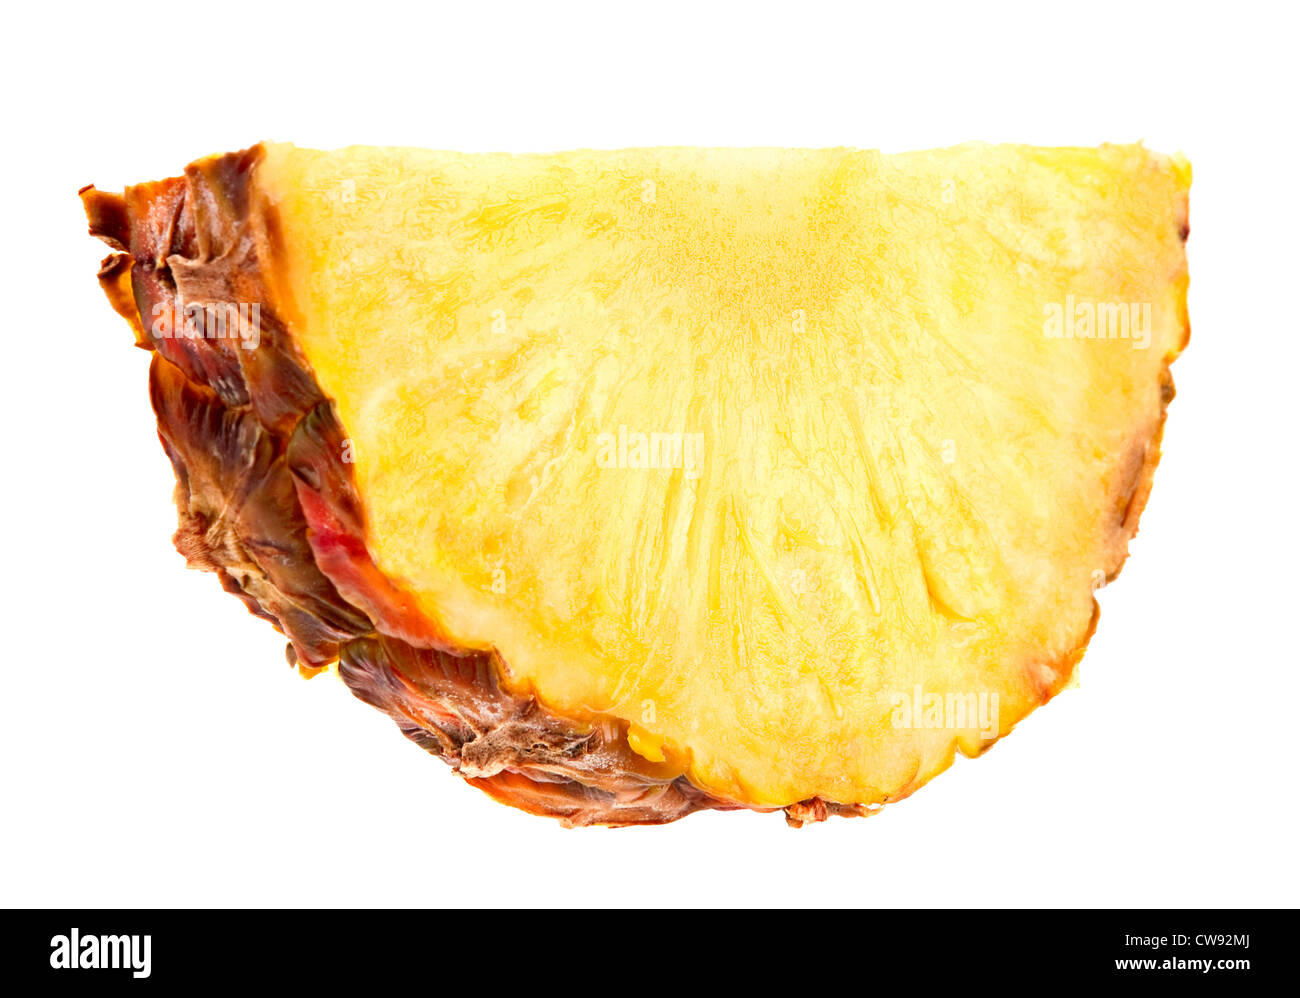 Piña fruta rebanada aislado en blanco Foto de stock